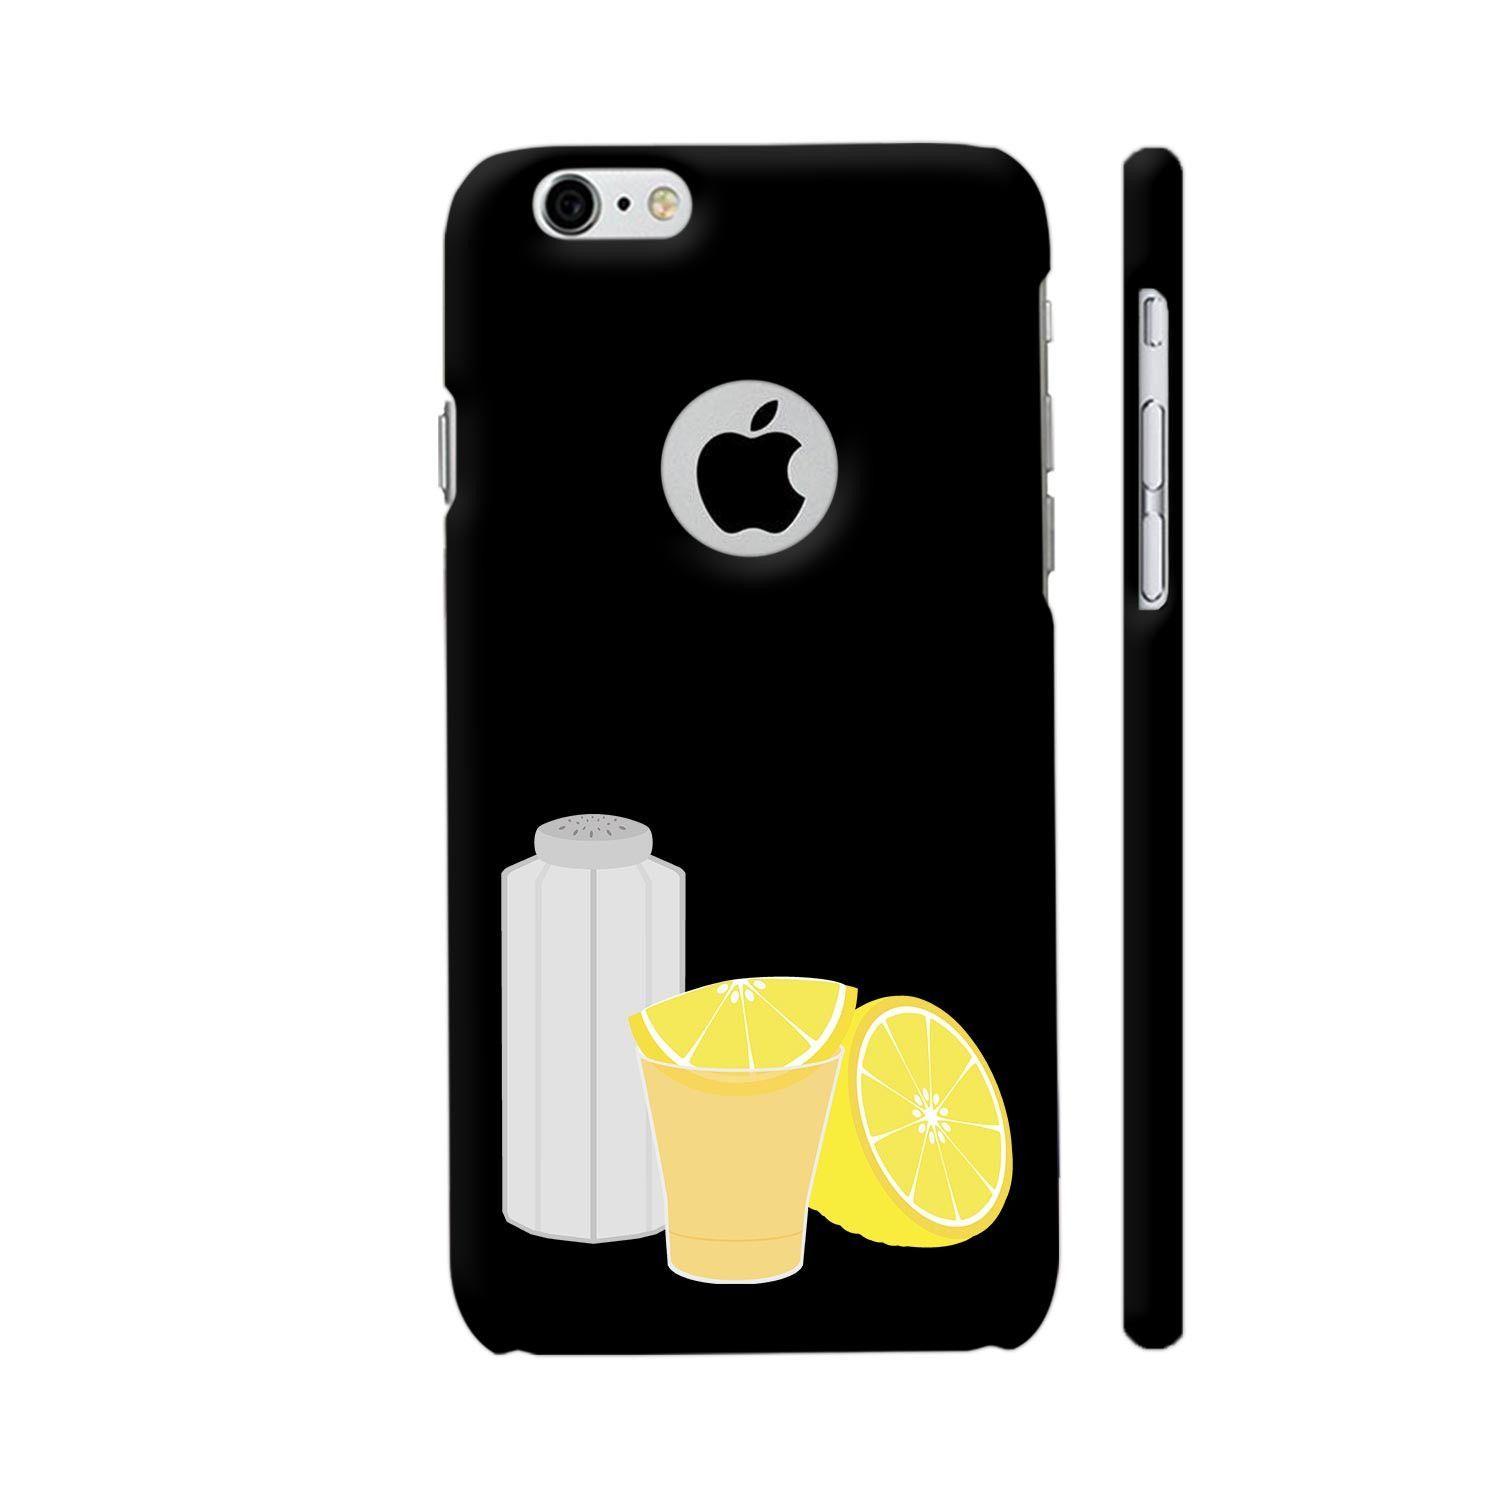 Lemon Phone Logo - Salt Lemon And Tequila iPhone 6 / 6s Logo Cut Cover | Artist: Torben ...